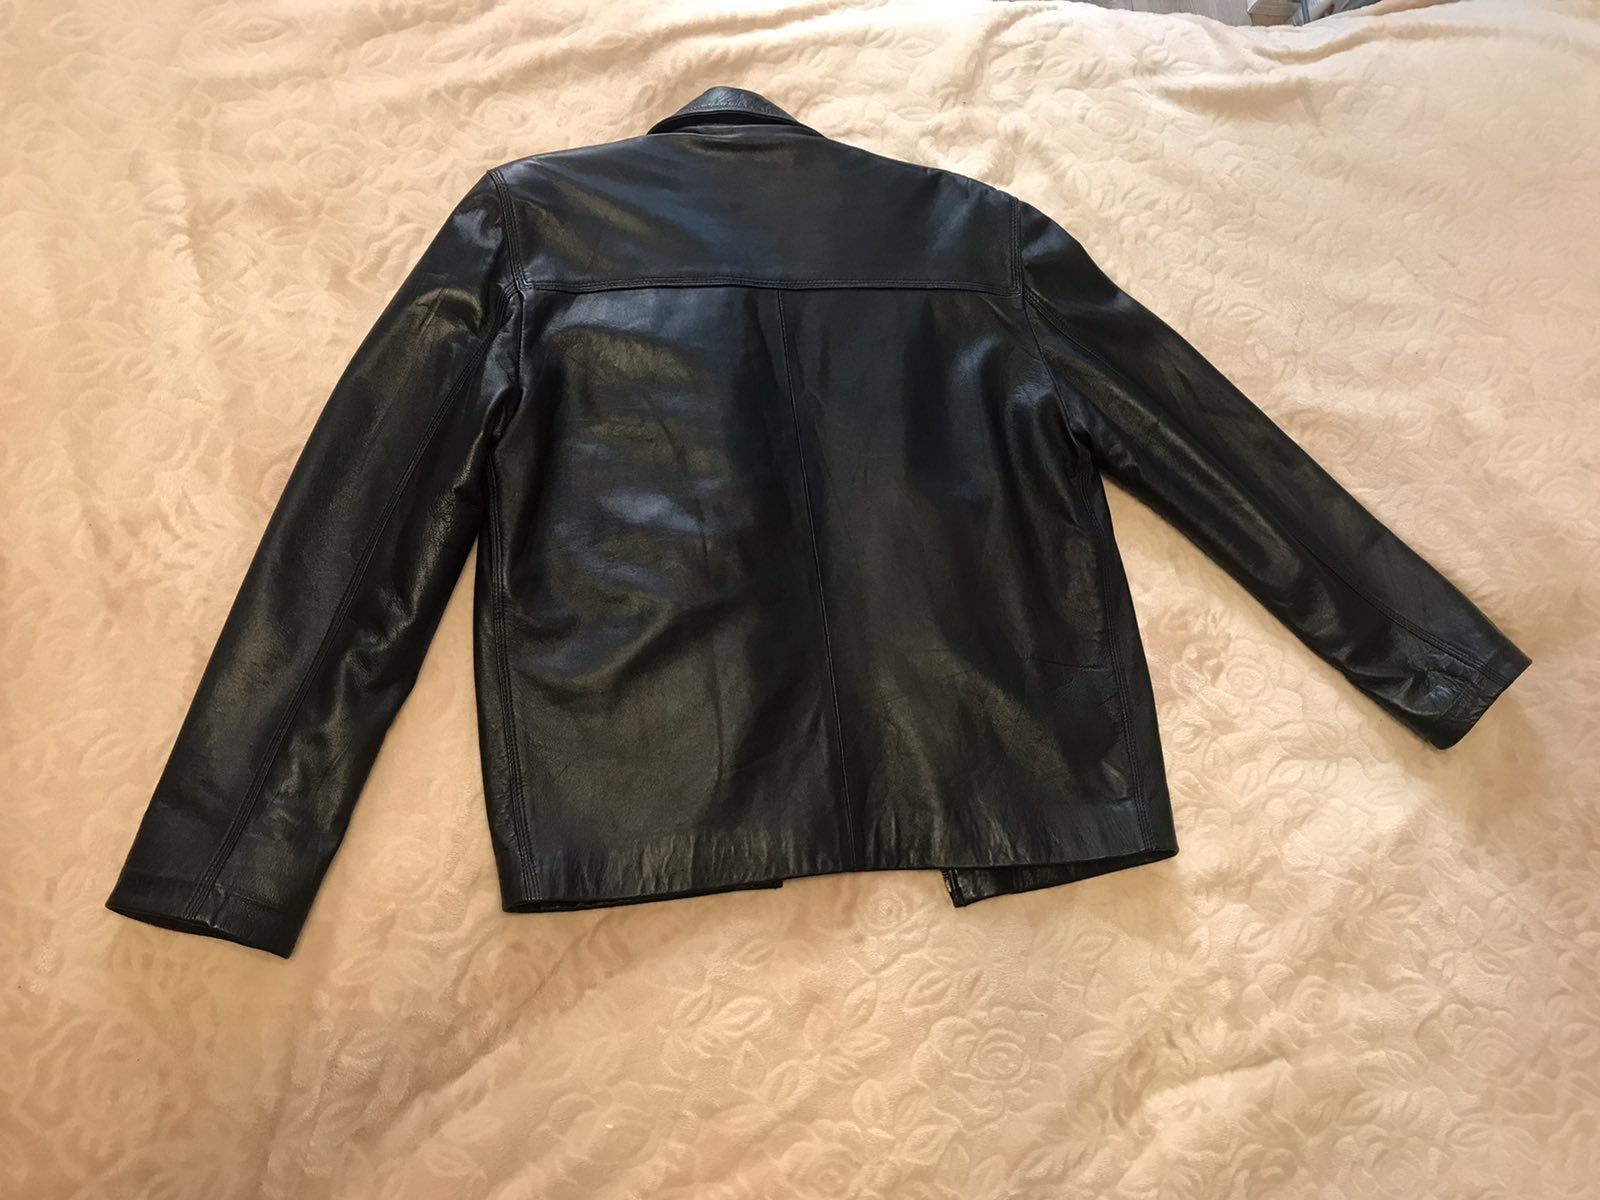 Продам кожаную мужскую курточку новая 46 размер 2500гр